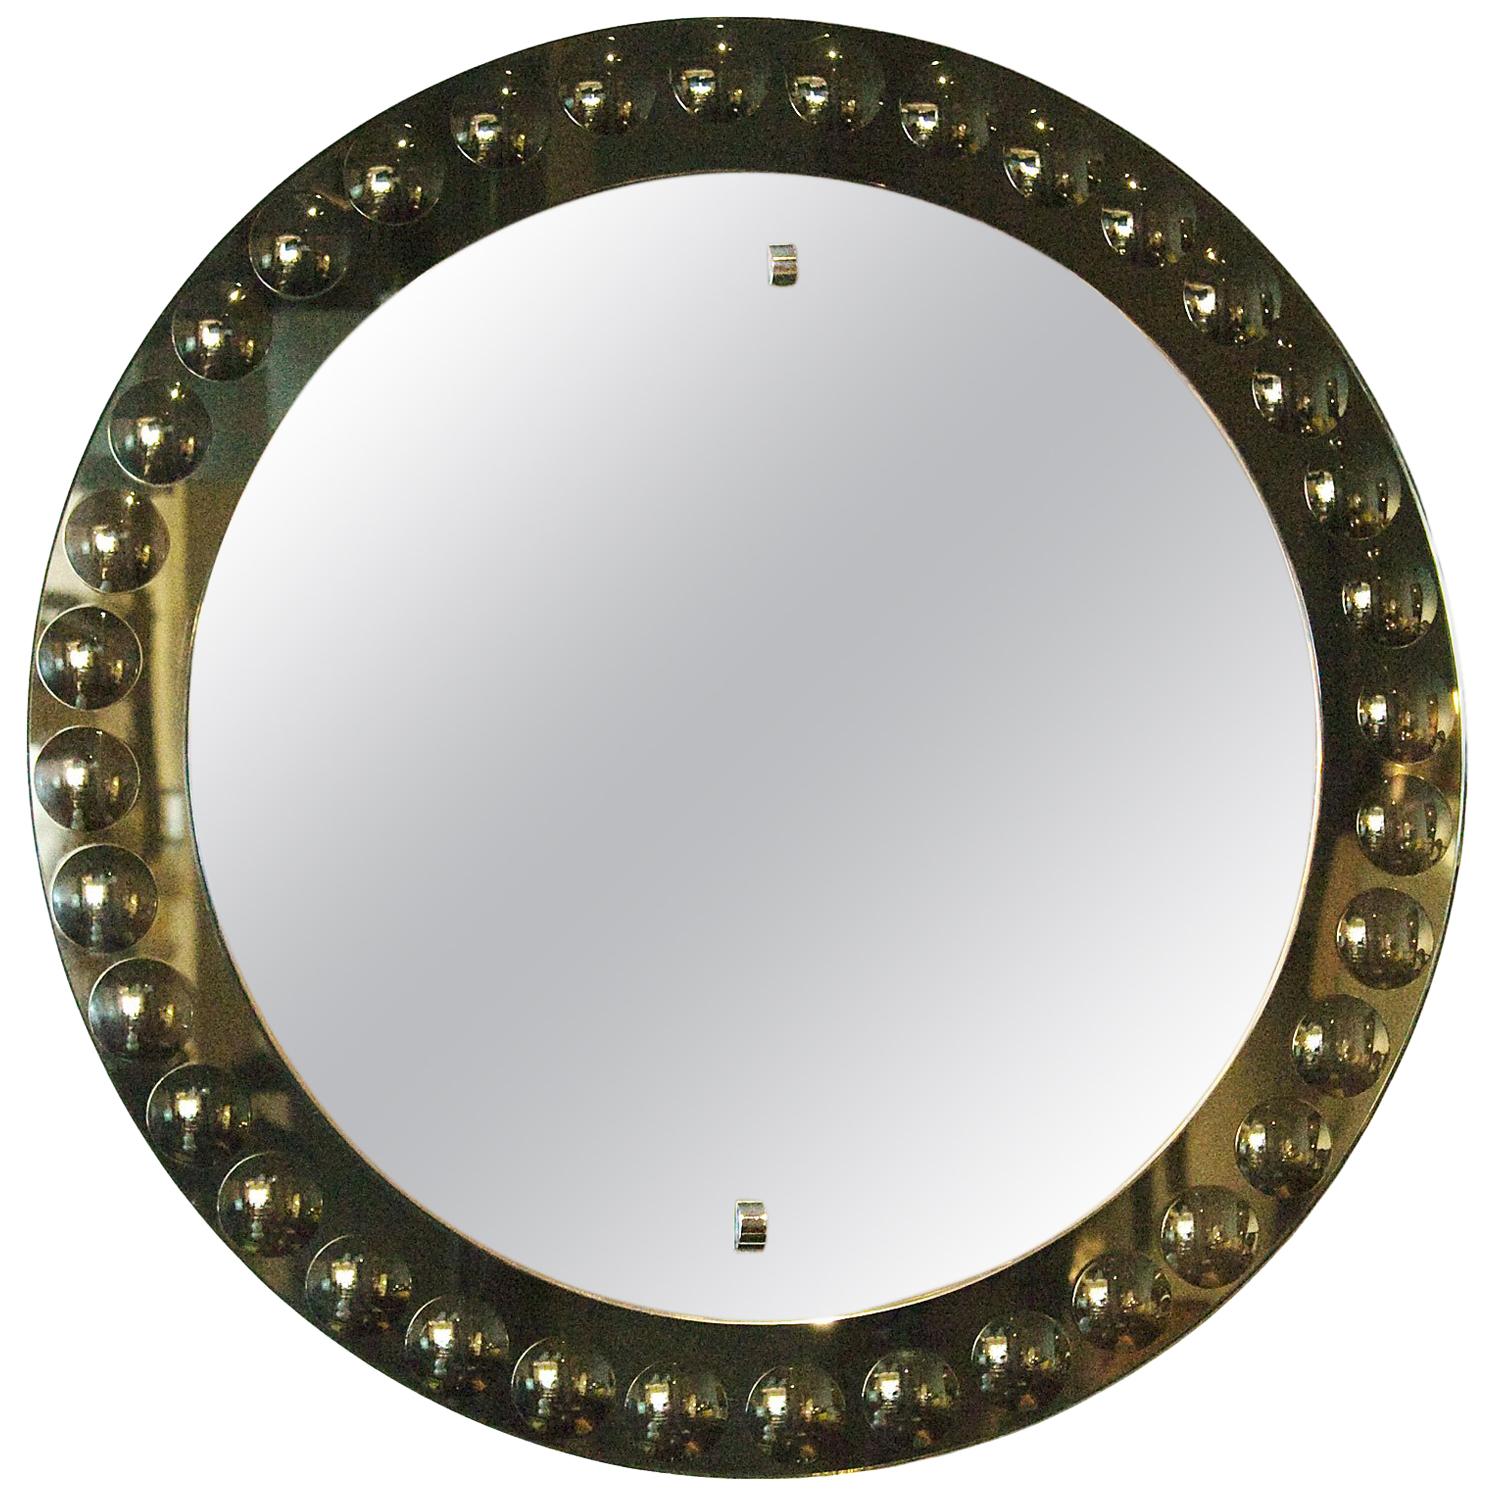 1950s Round Mirror, Intaglio Grey-Green Mirror Frame, Italy